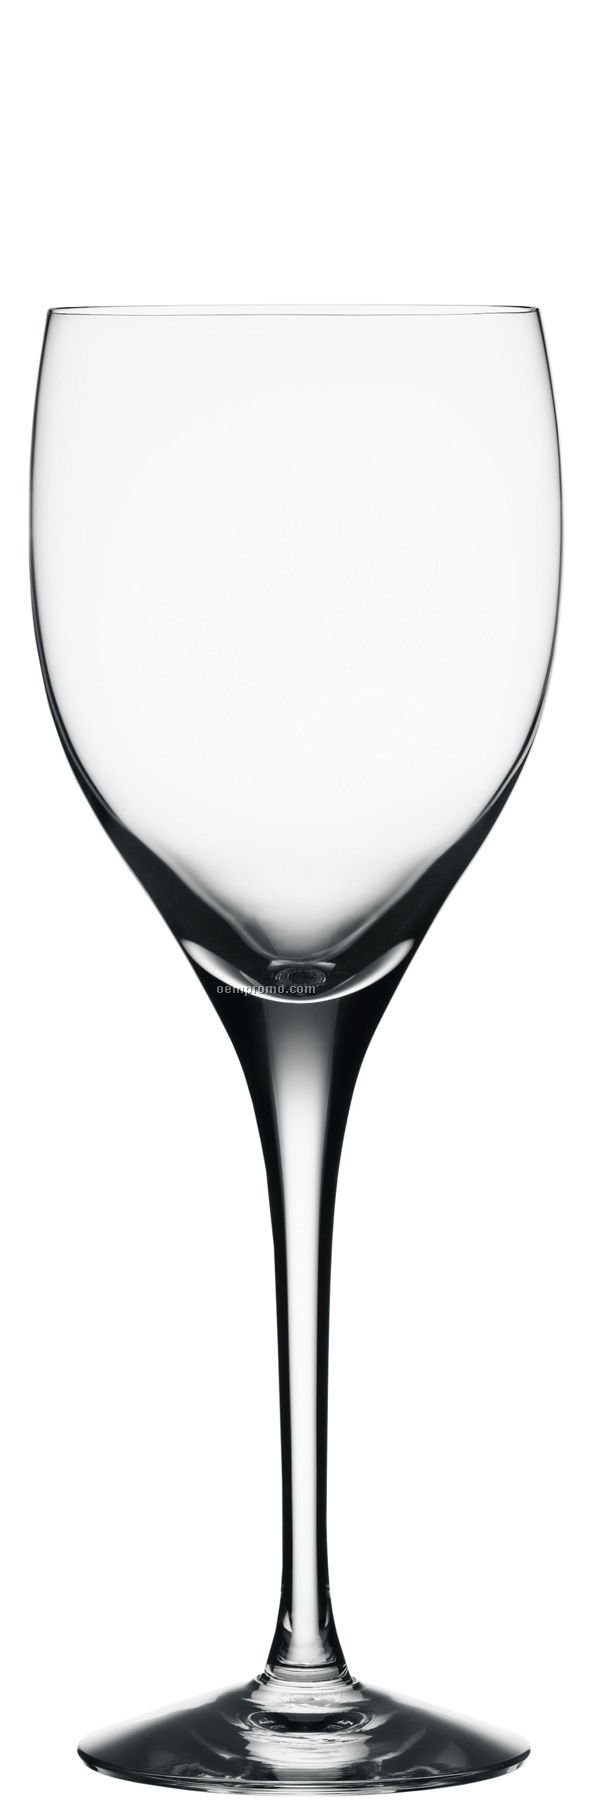 Illusion Hand Blown Crystal Wine Glass Stemware By Nils Landberg